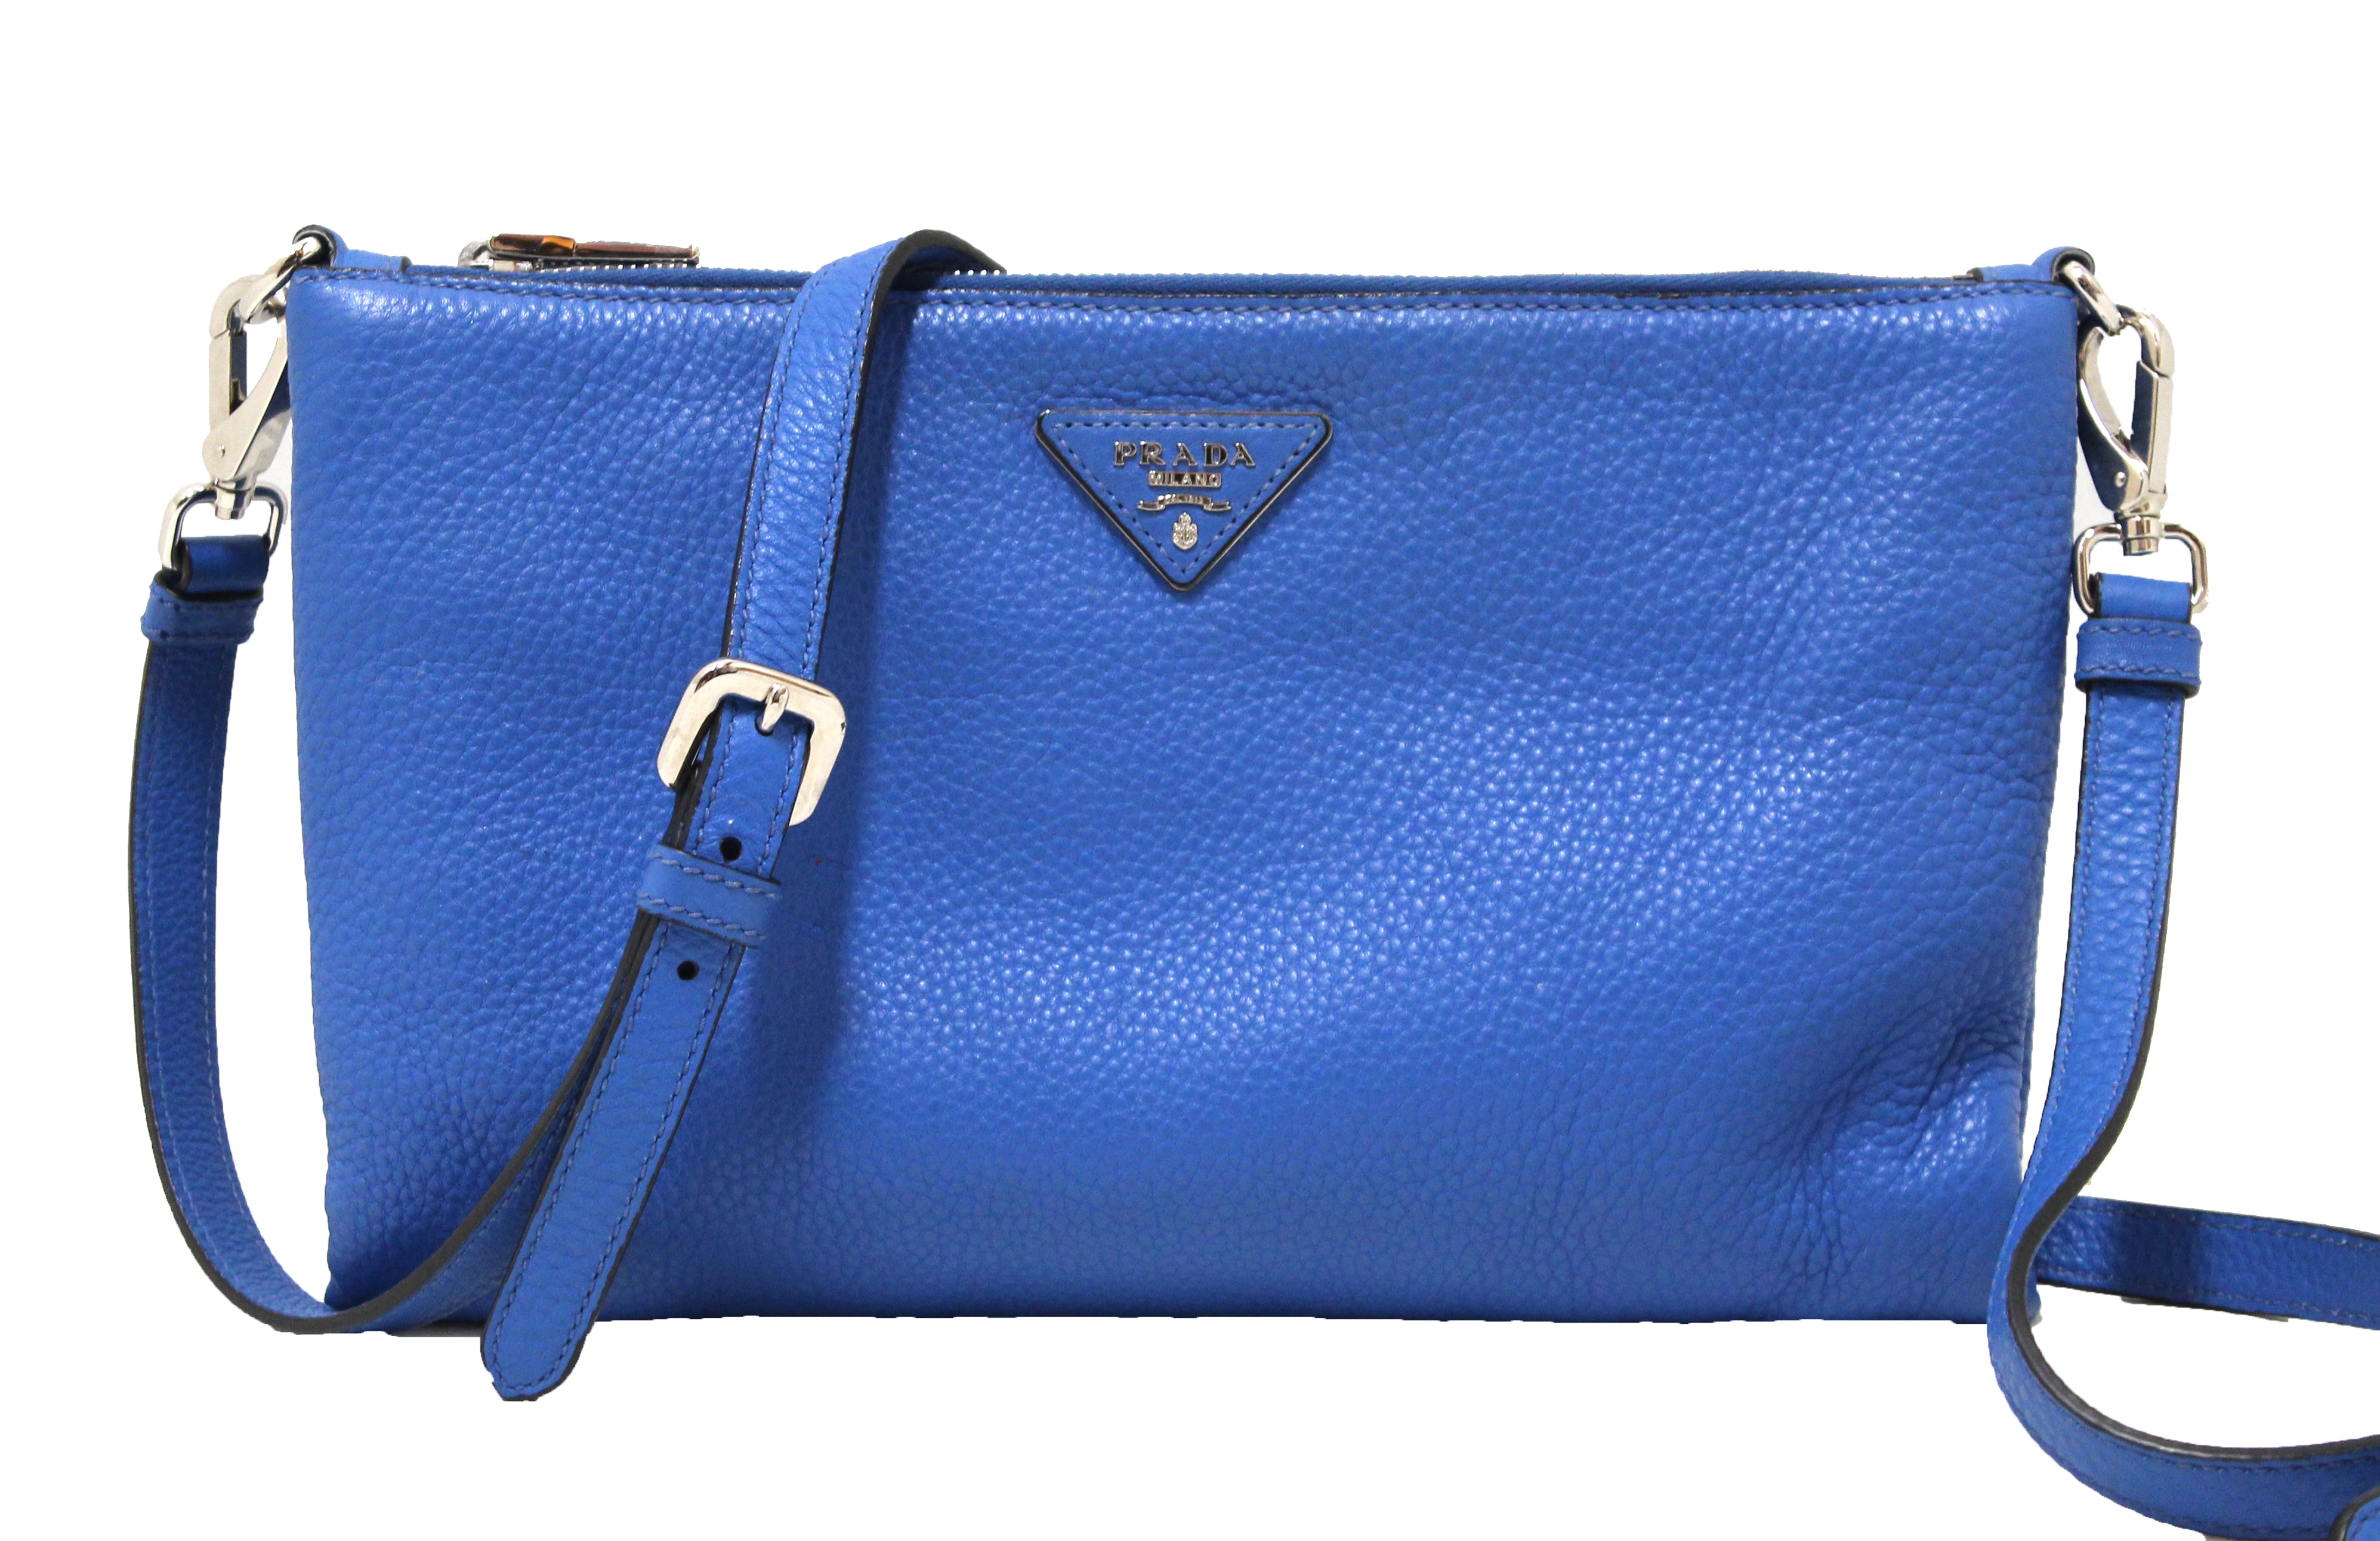 Authentic Prada Blue Calfskin Leather Messenger Bag – Paris